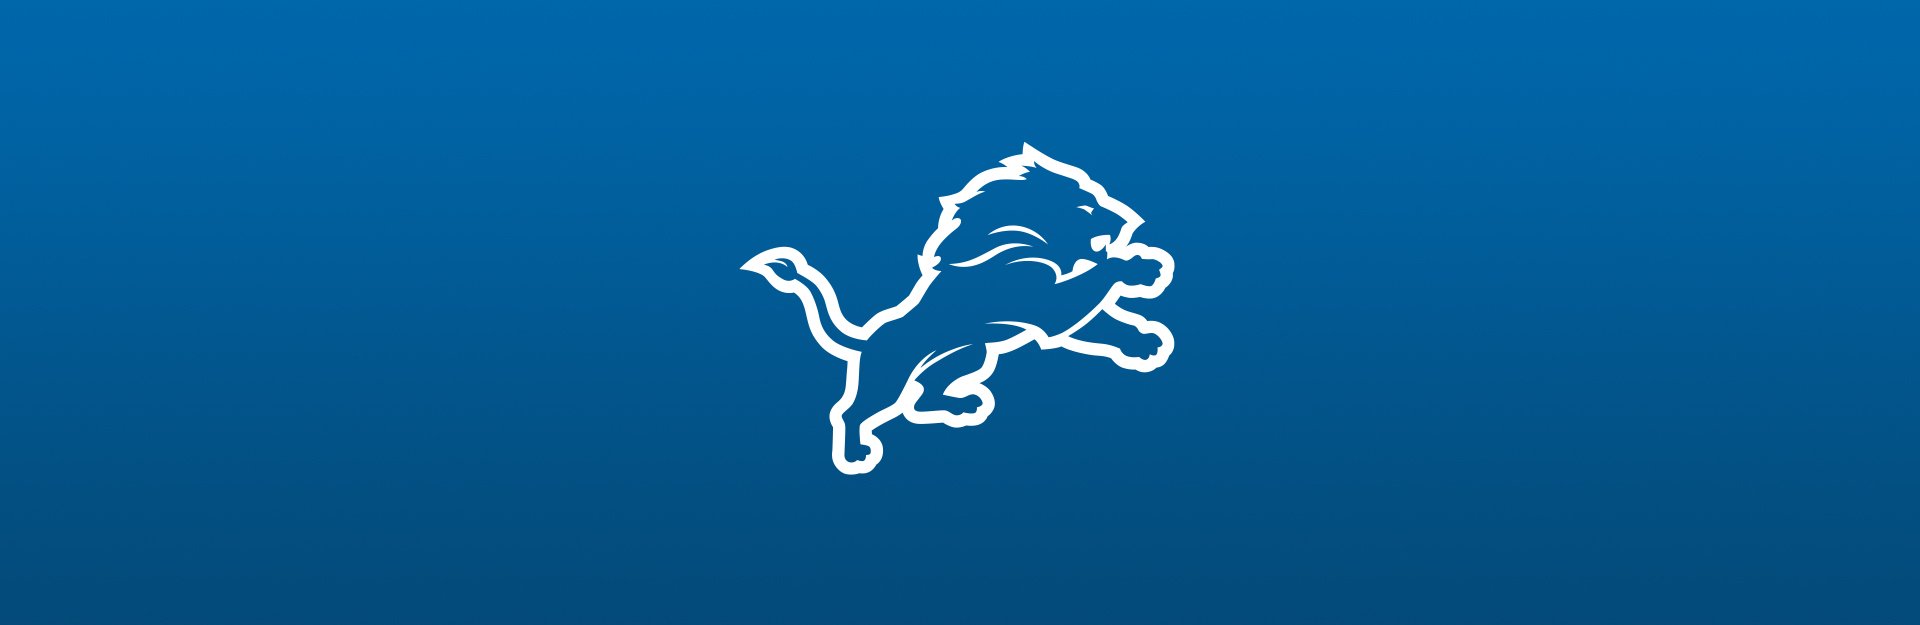 Detroit Lions logo on blue background